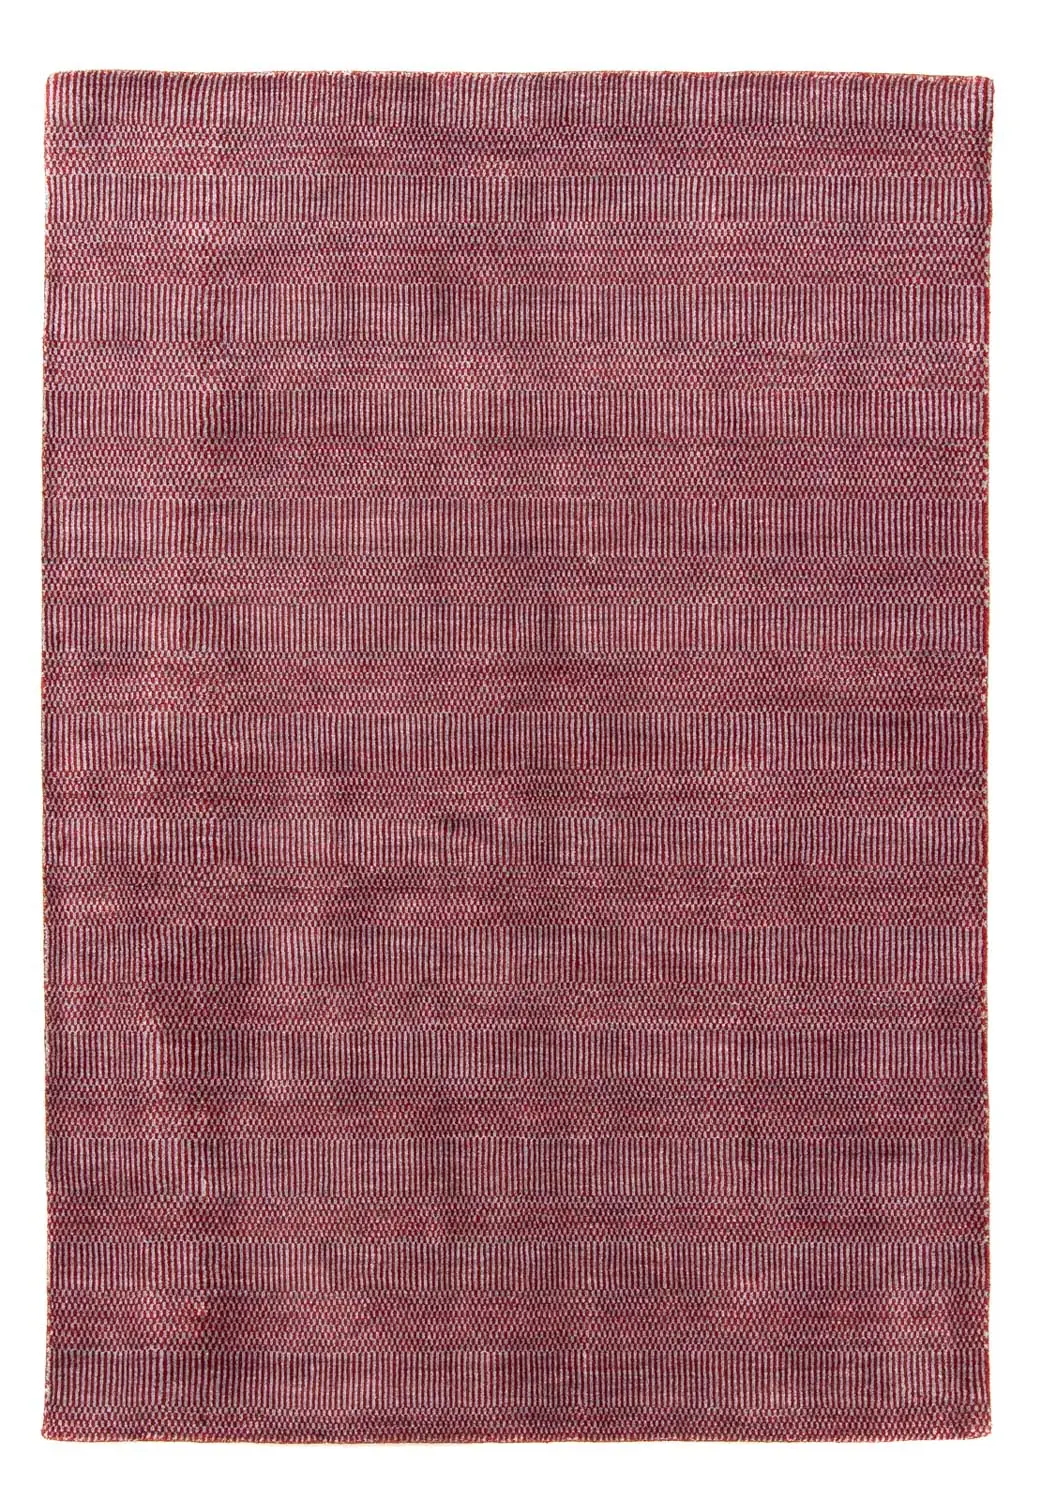 Designer Teppich - 201 x 142 - cm rot